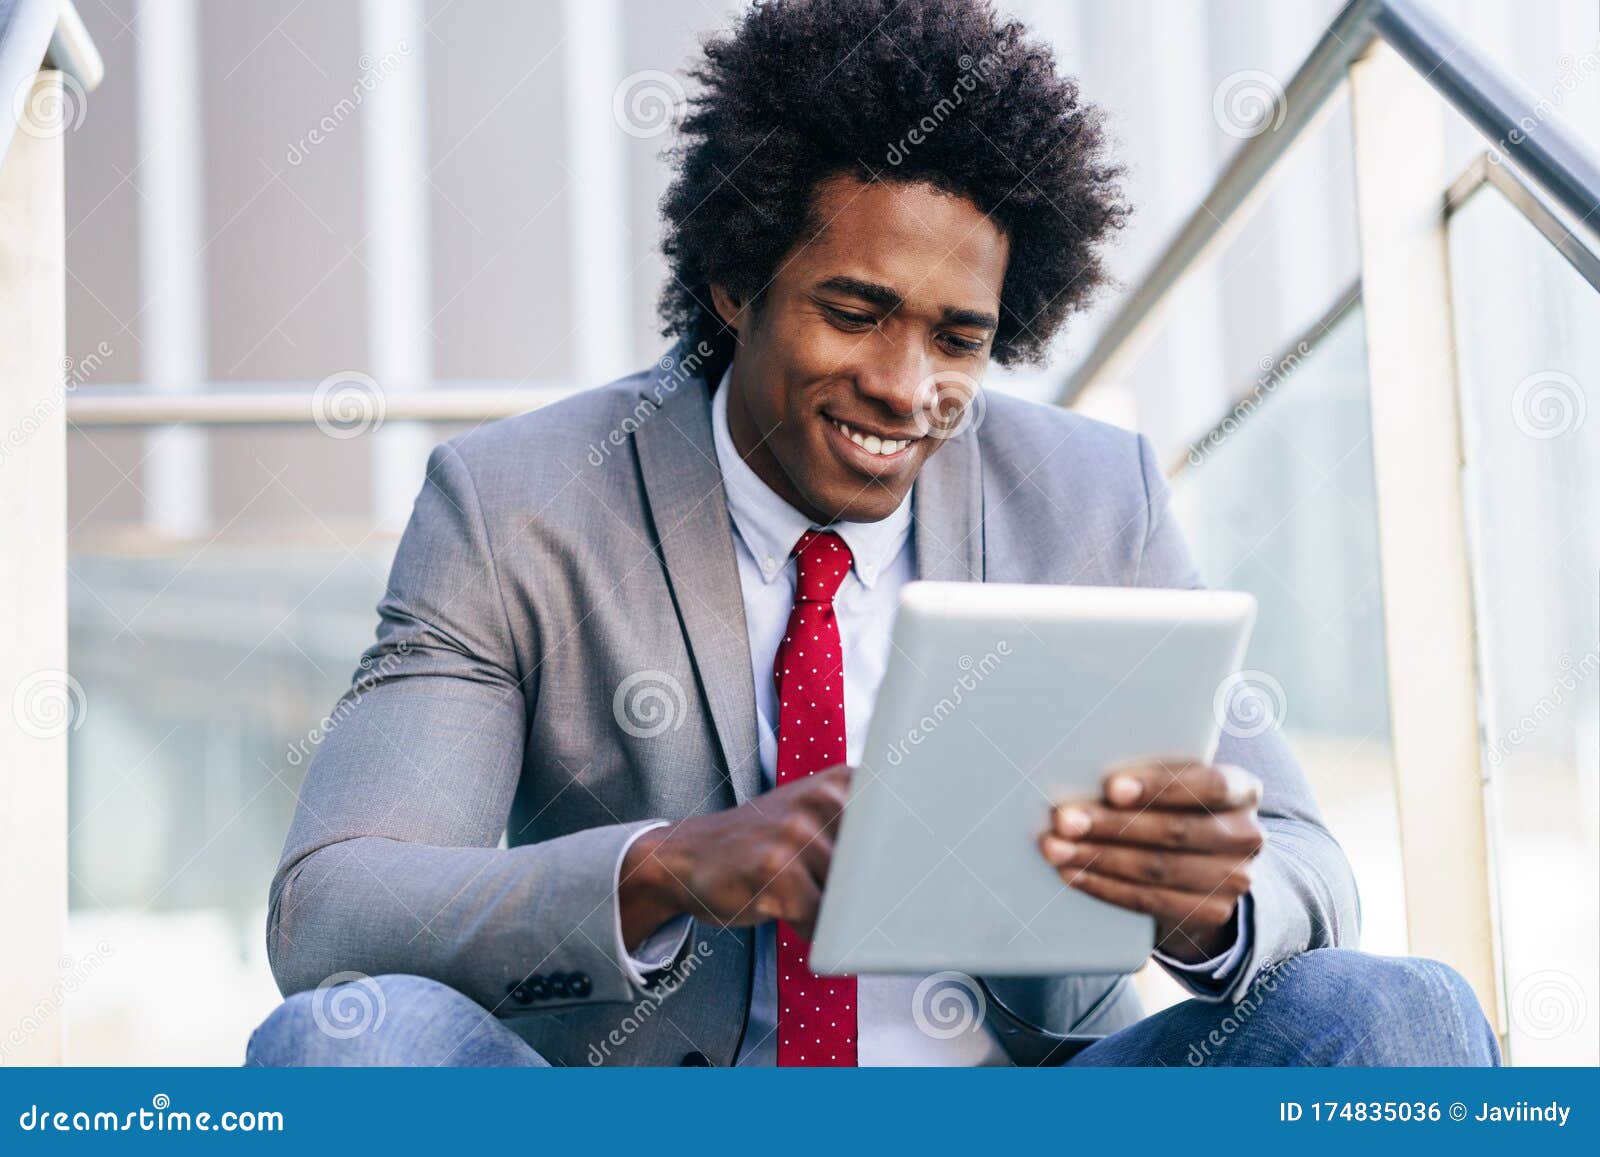 black businessman using a digital tablet sitting near an office building.